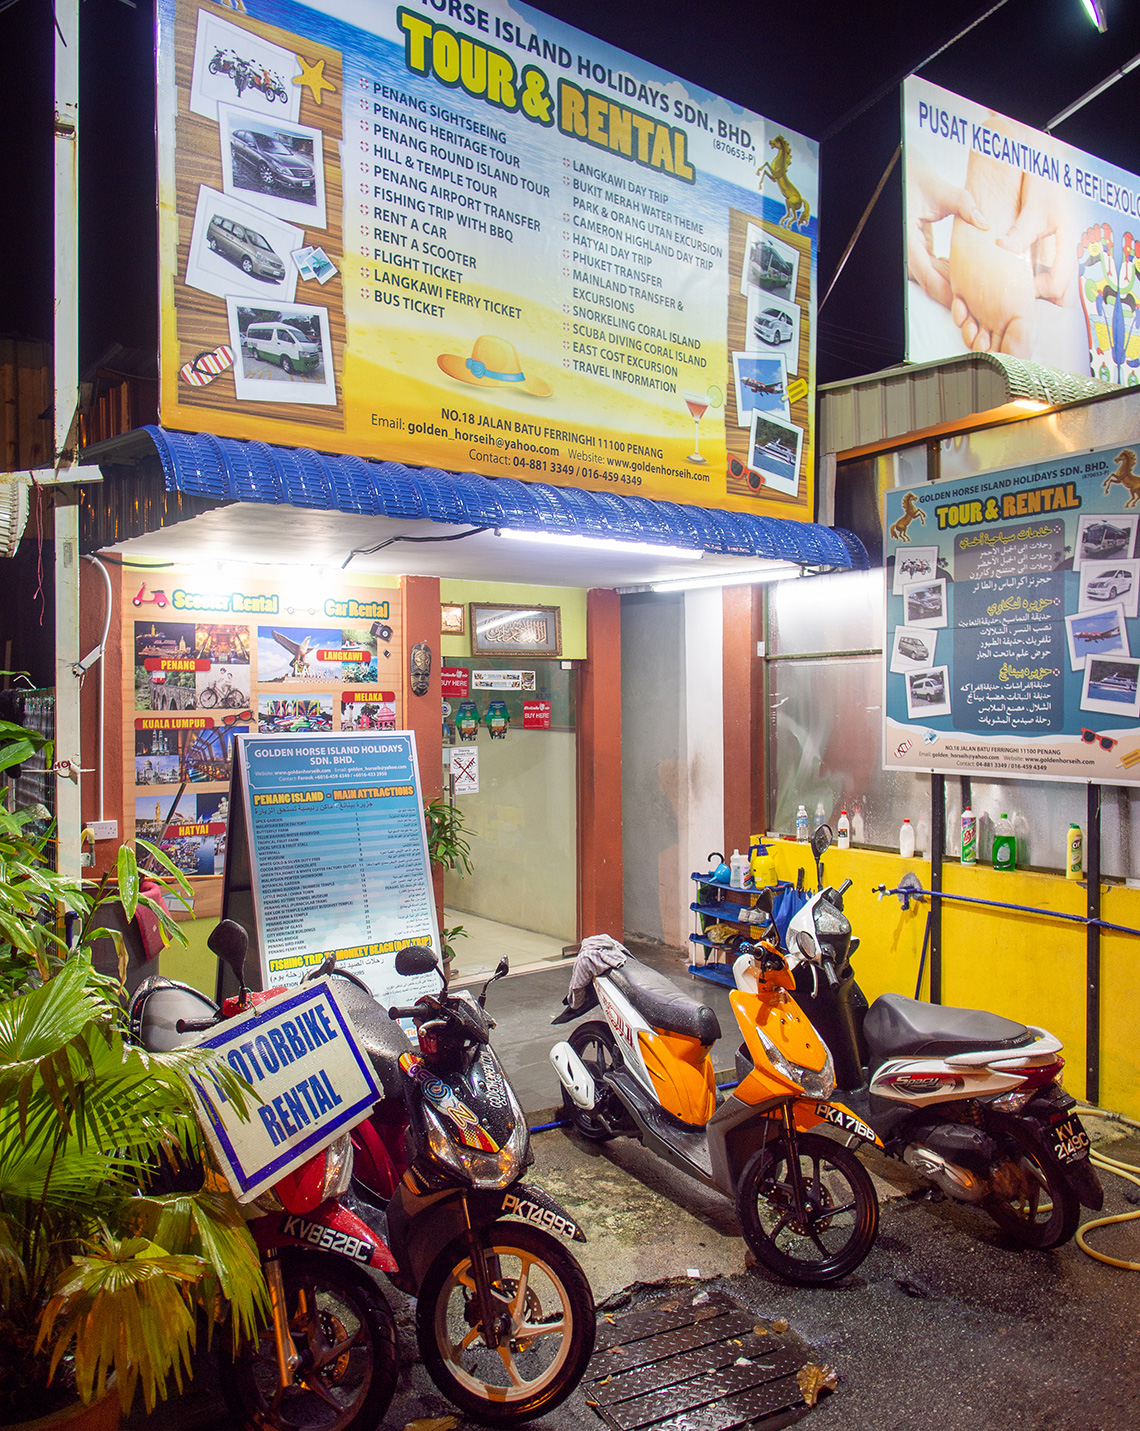 Tours in Maleisie - Lokaal reisbureautje op Penang